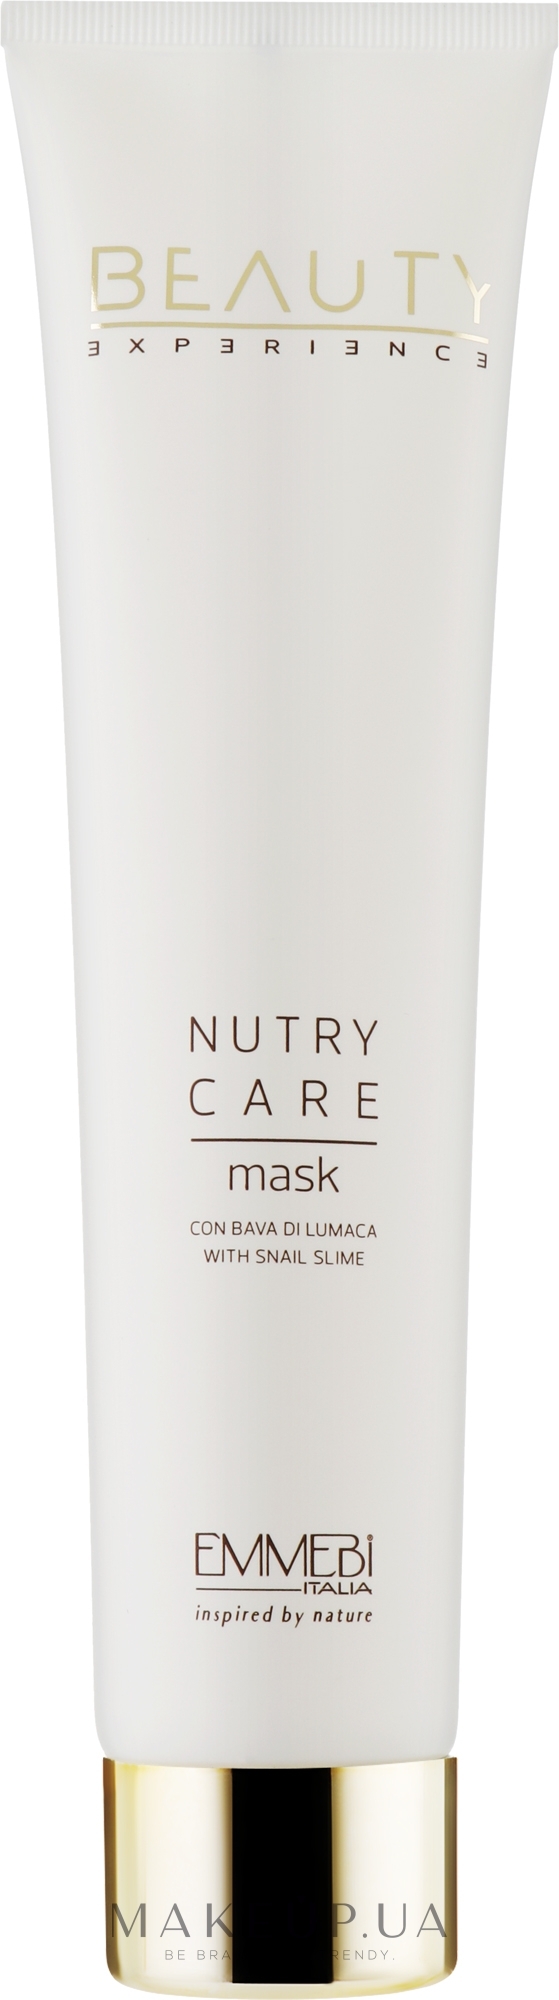 Маска для волос - Emmebi Italia Beauty Expeience Mask — фото 200ml